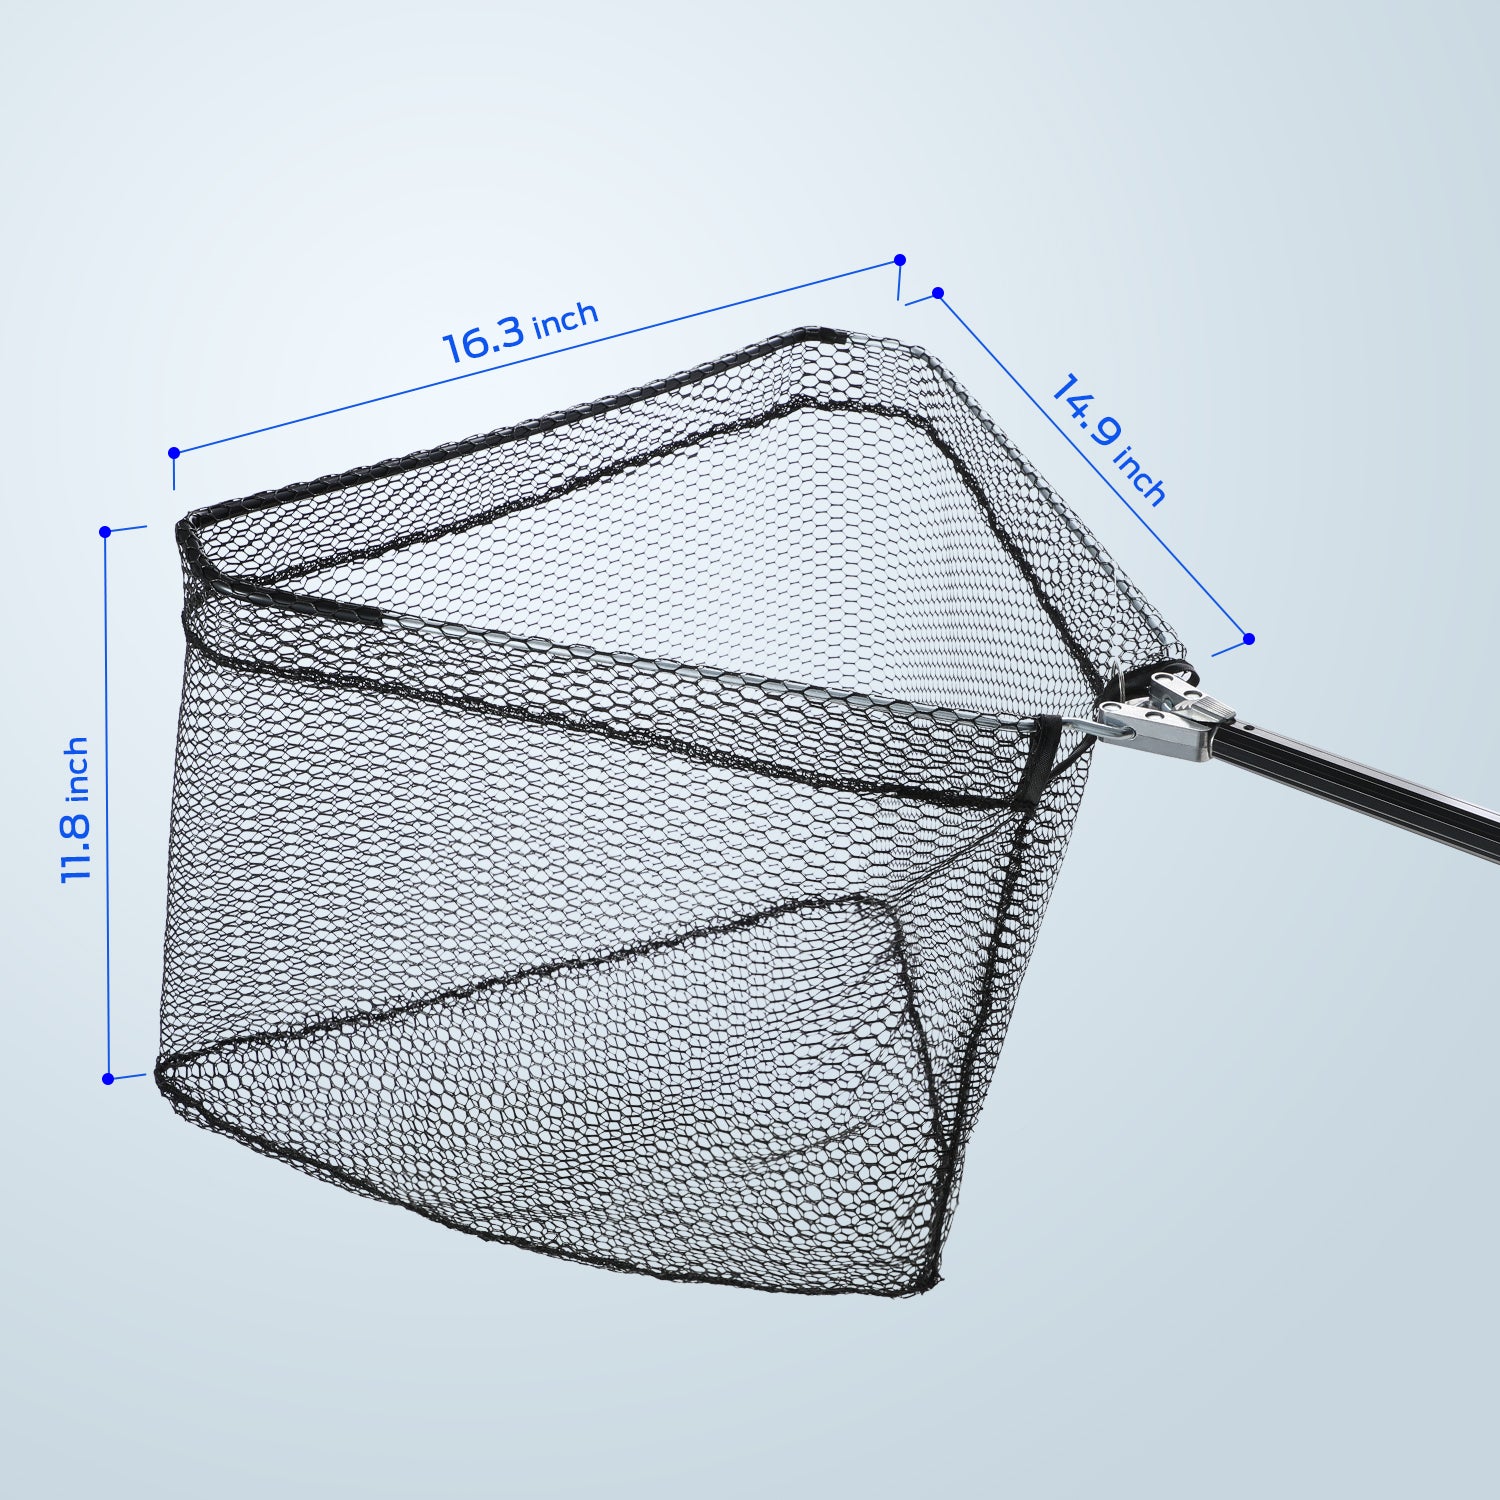 PROBEROS Ponds Carp Trout Fishing, Portable Telescopic Fishing Net